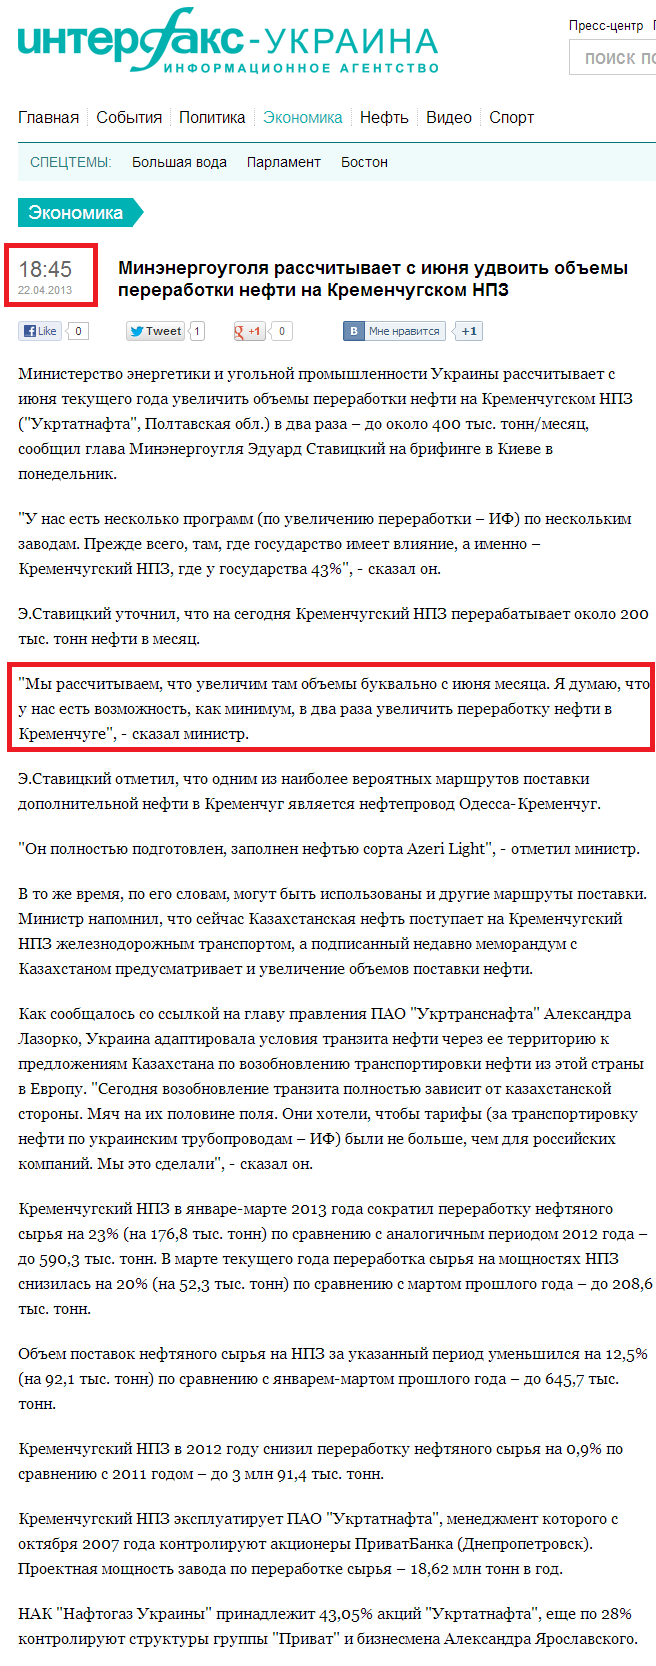 http://interfax.com.ua/news/economic/150496.html